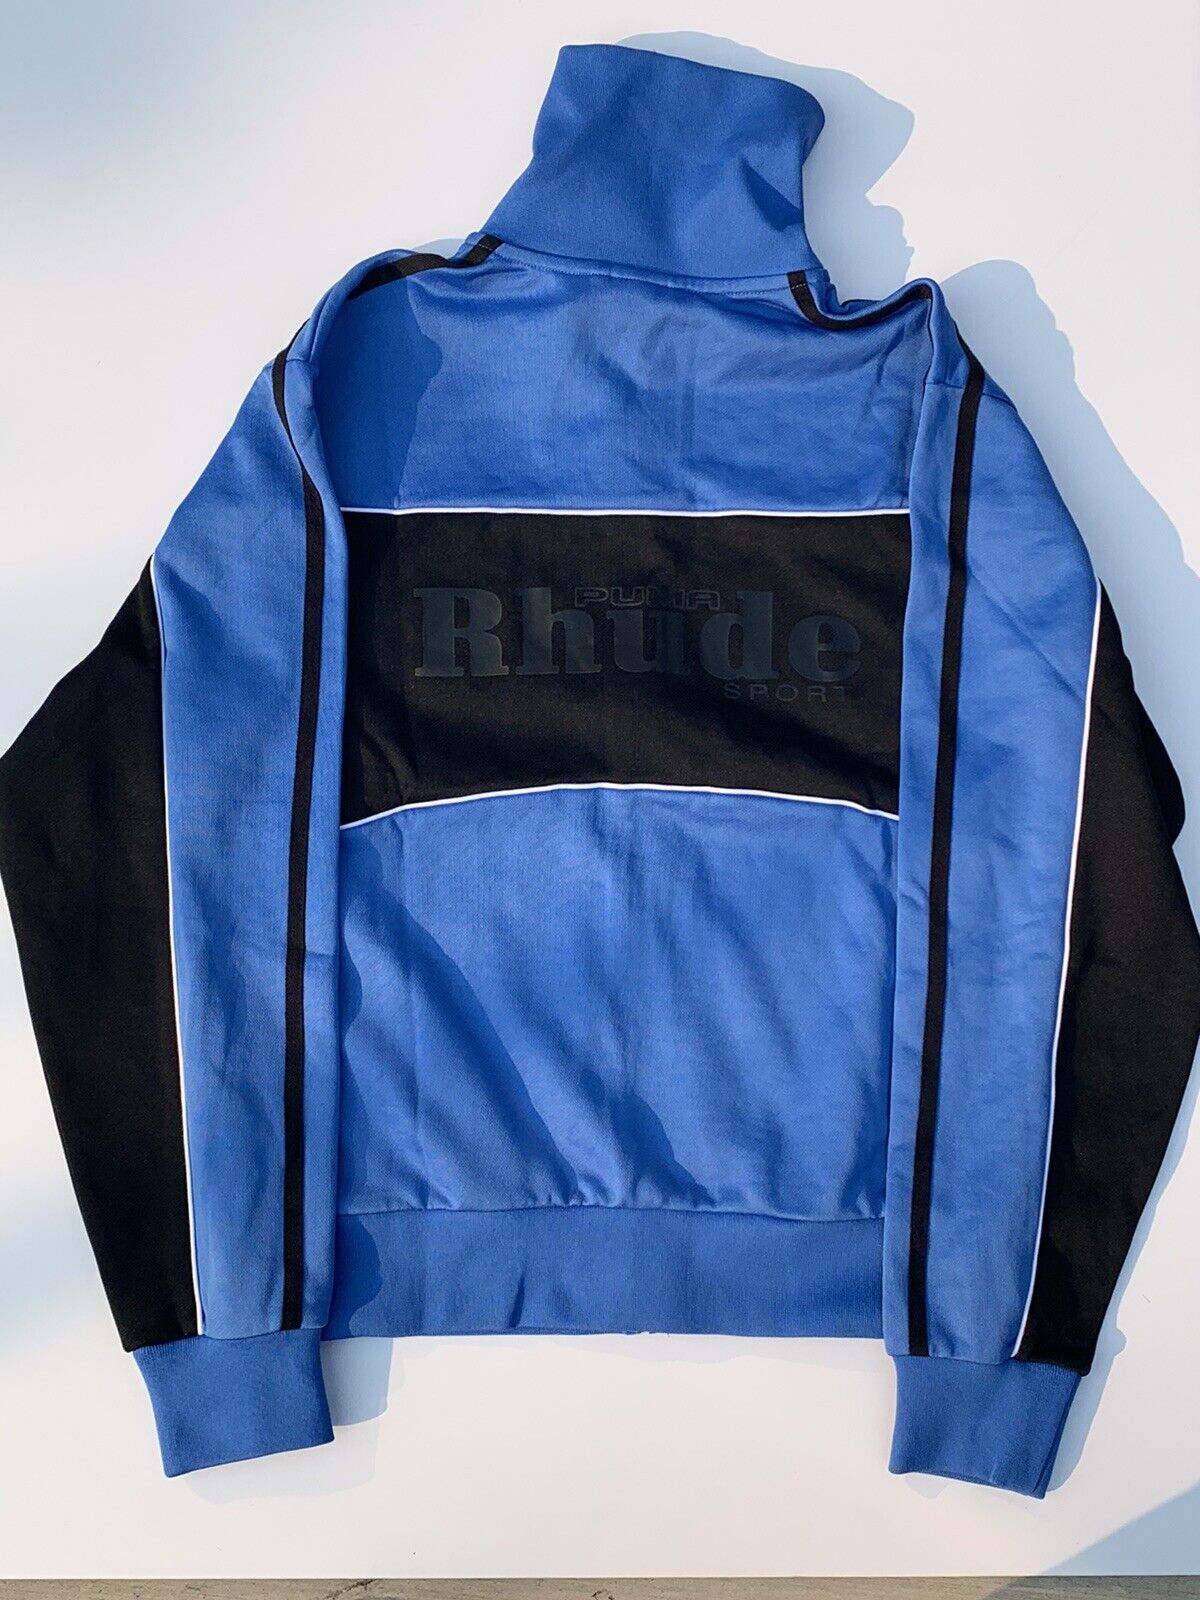 RHUDE Track Jacket Puma Collab Size Medium Puma X Rhude Sport $130 Retail